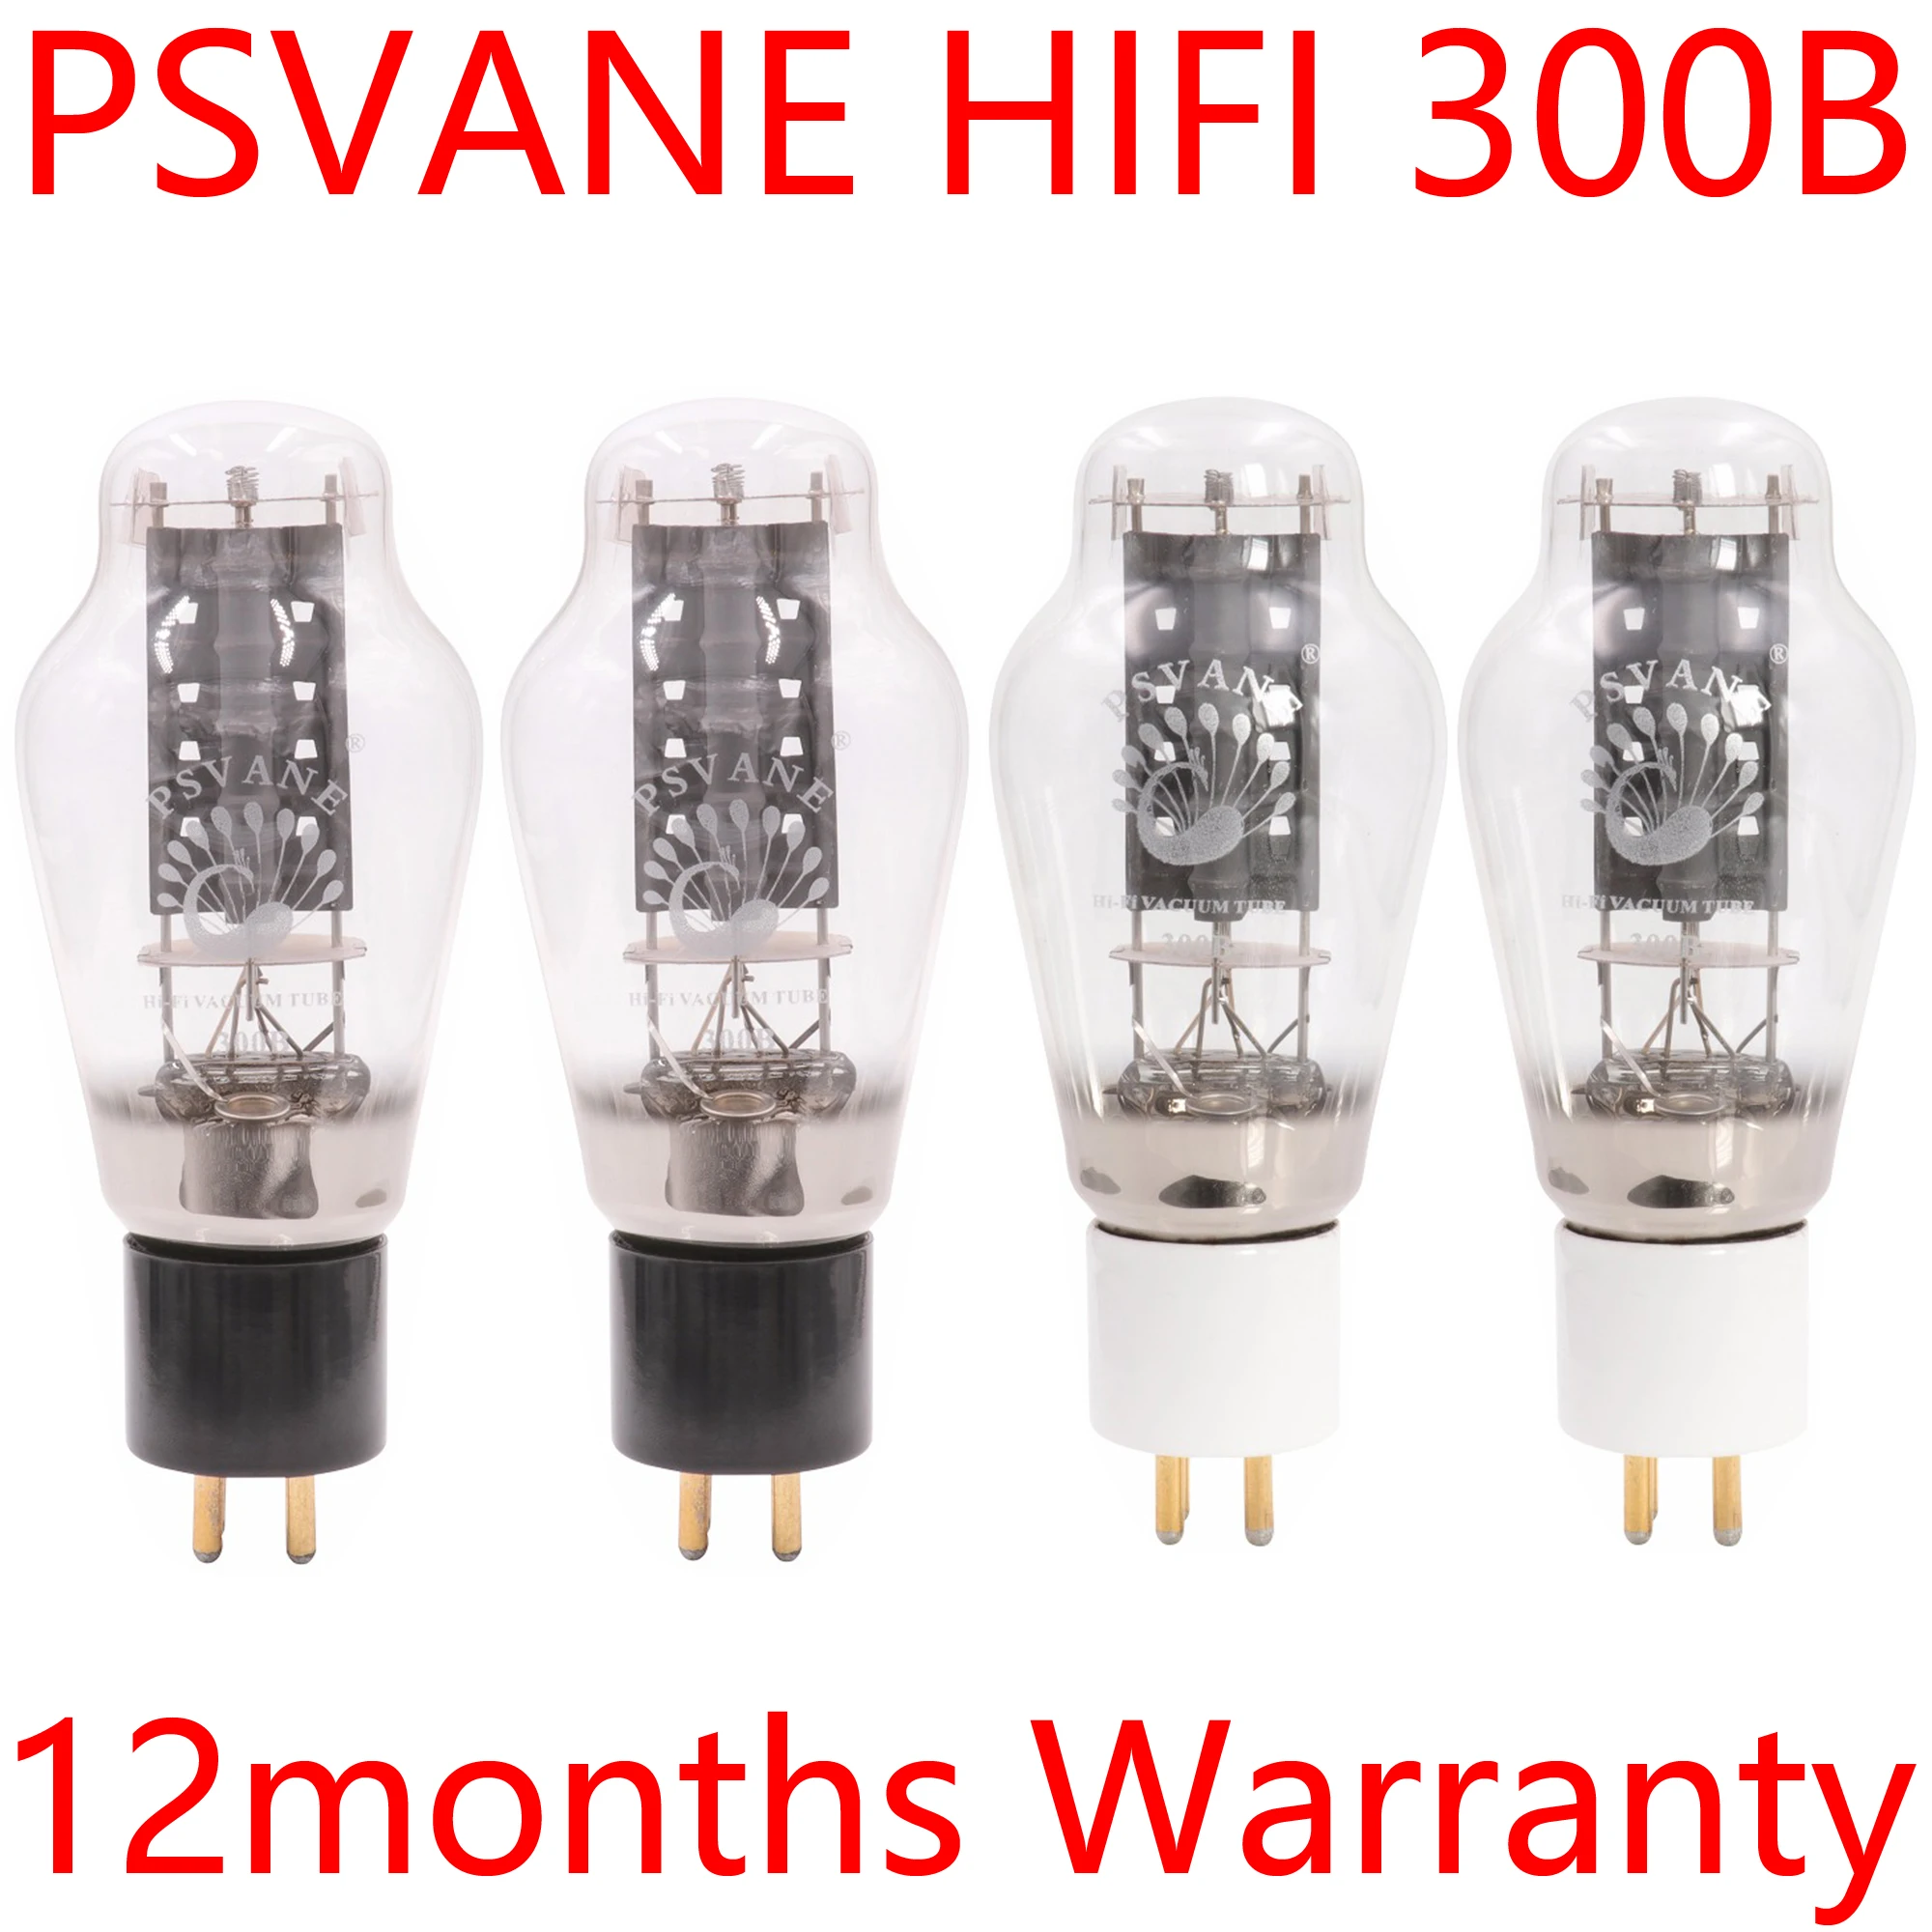 

Psvane HIFI 300B Vacuum Tube Valve Power Lamp For Vintage Audio Amplifier Replace Other Brand